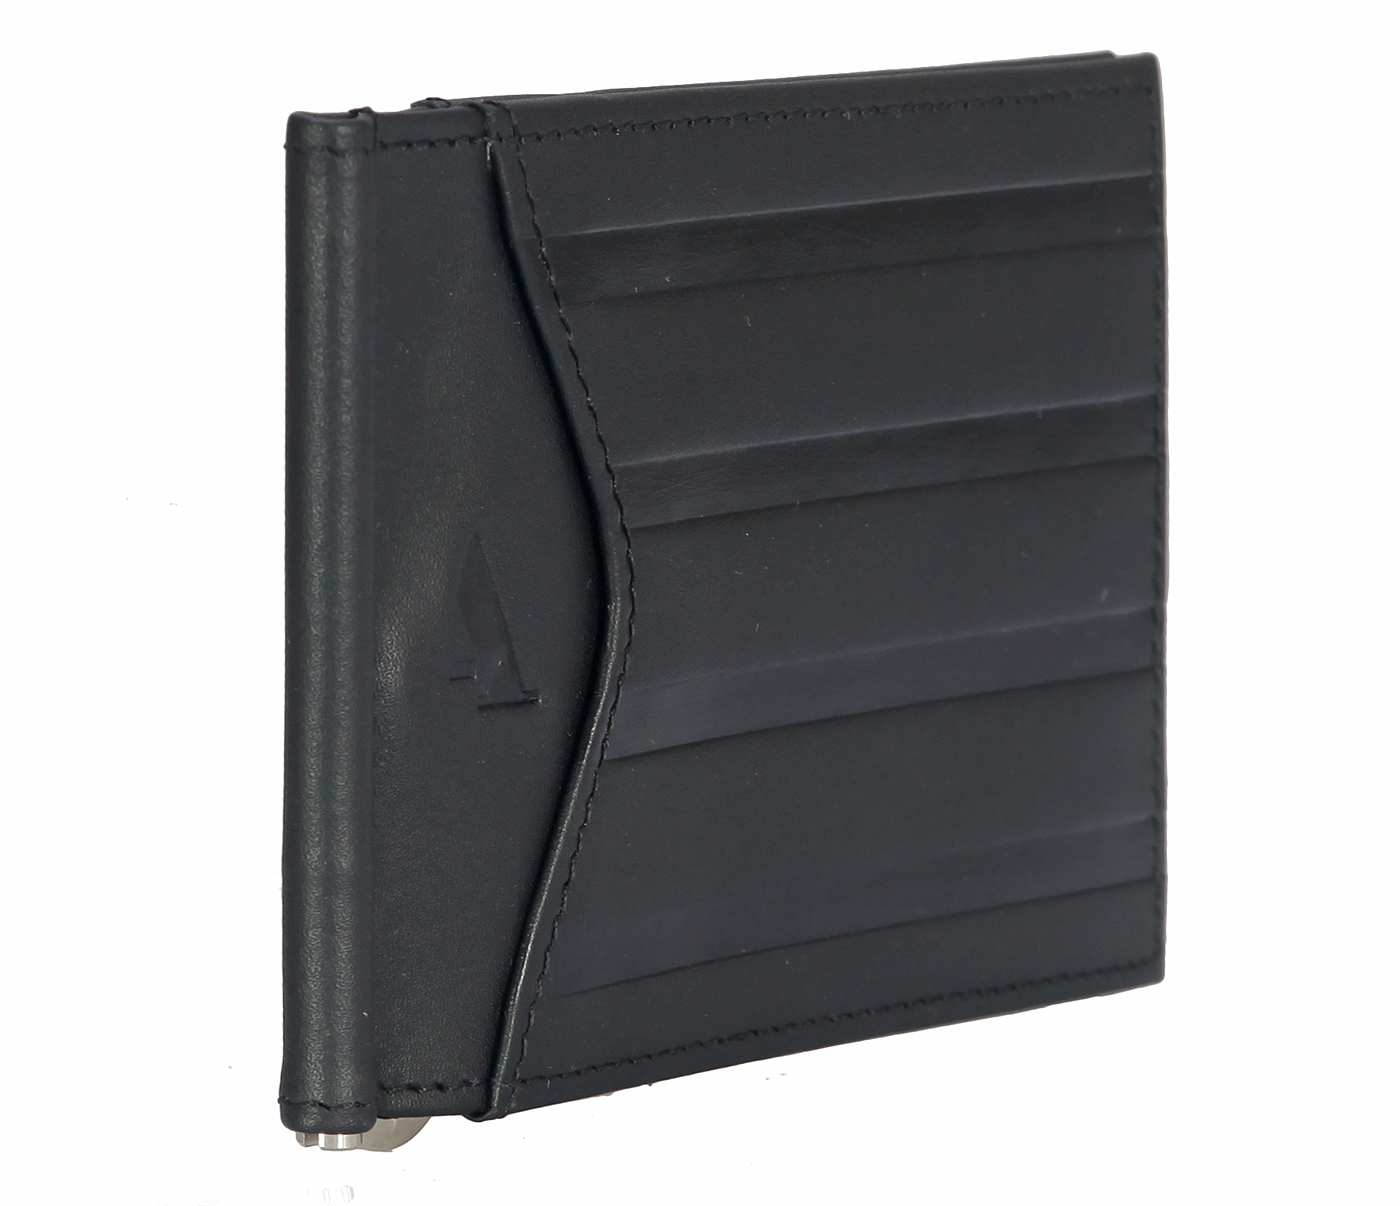 Wallet-Carl-Men's money clip cum card case wallet in Genuine Leather - Black